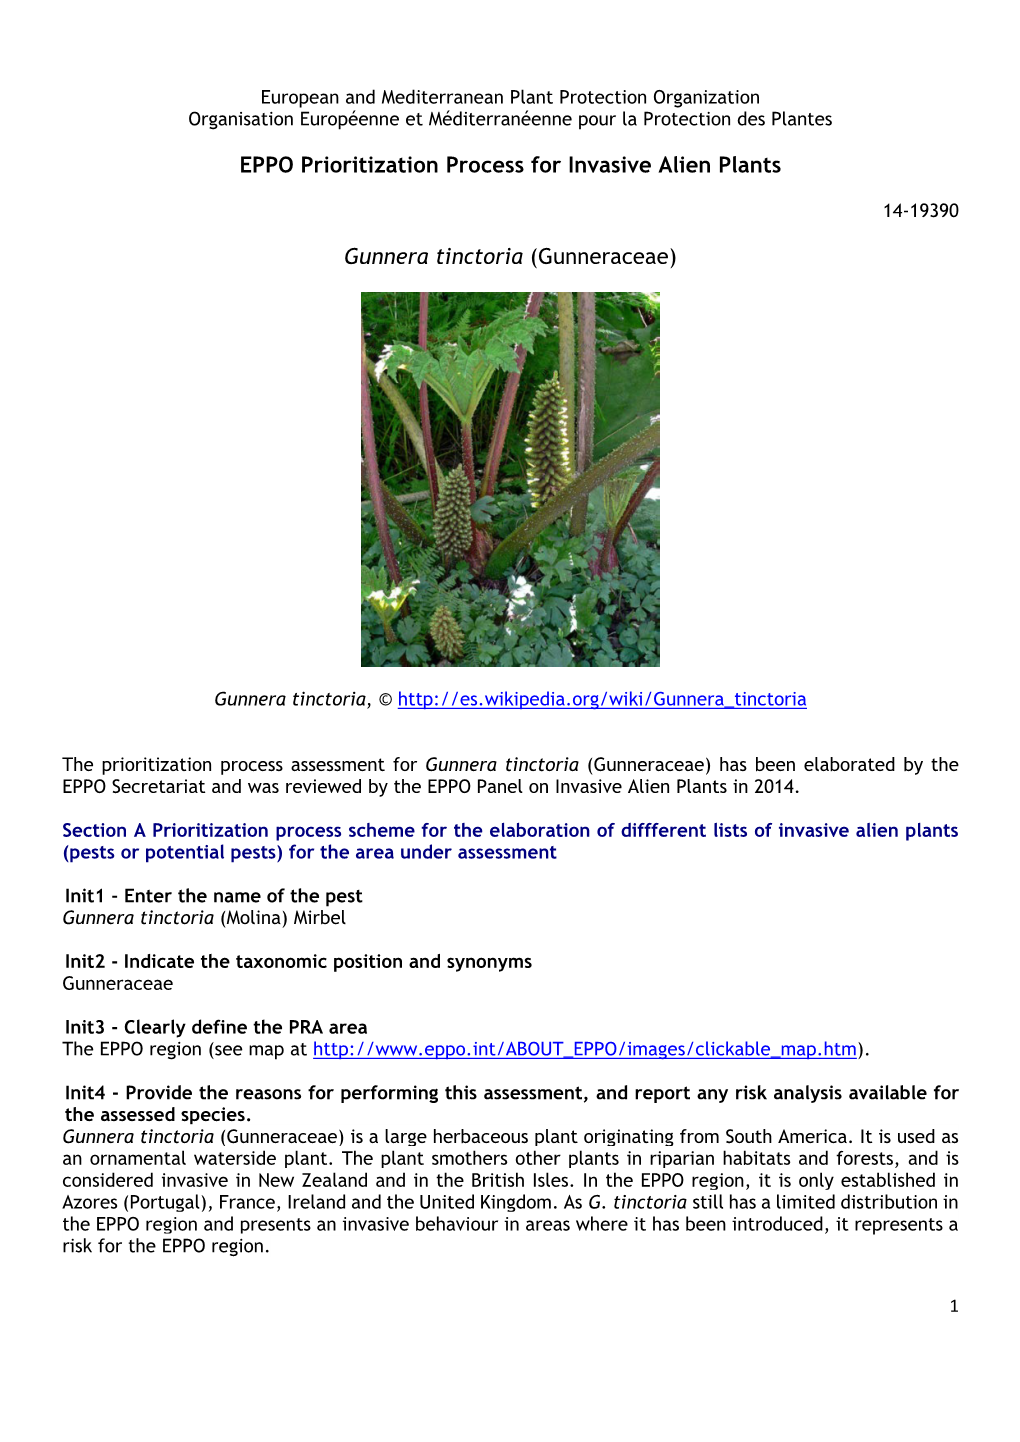 EPPO Prioritization Process for Invasive Alien Plants Gunnera